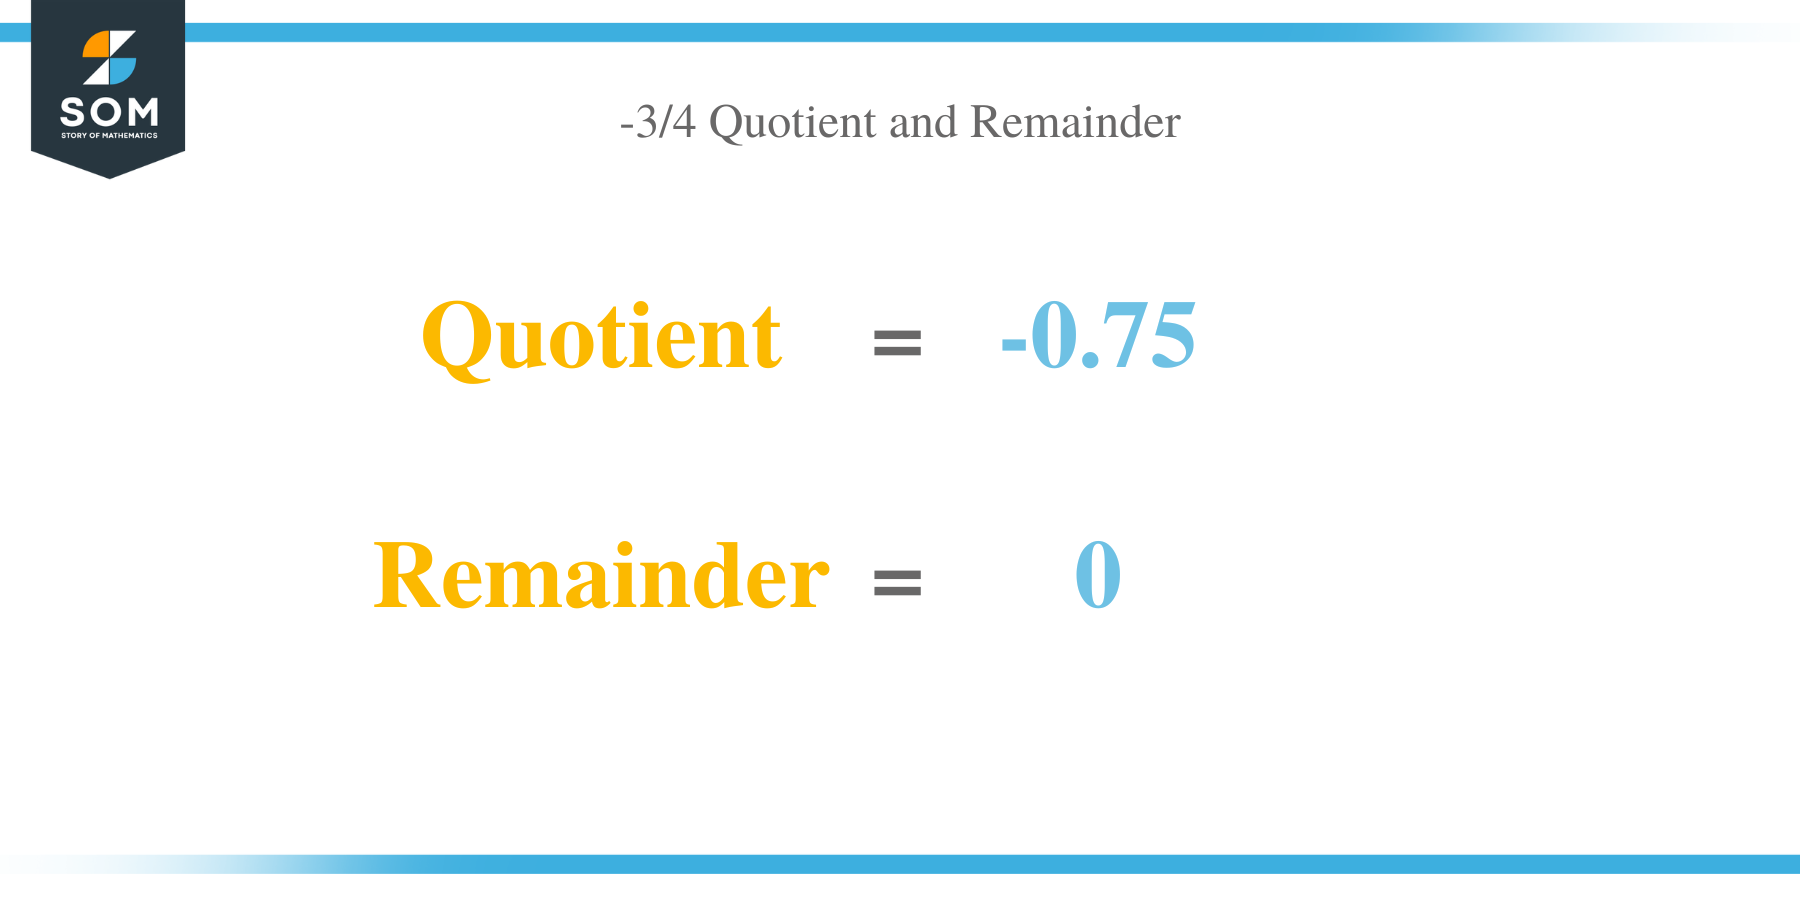 Quotient and remainder of 3 per 4